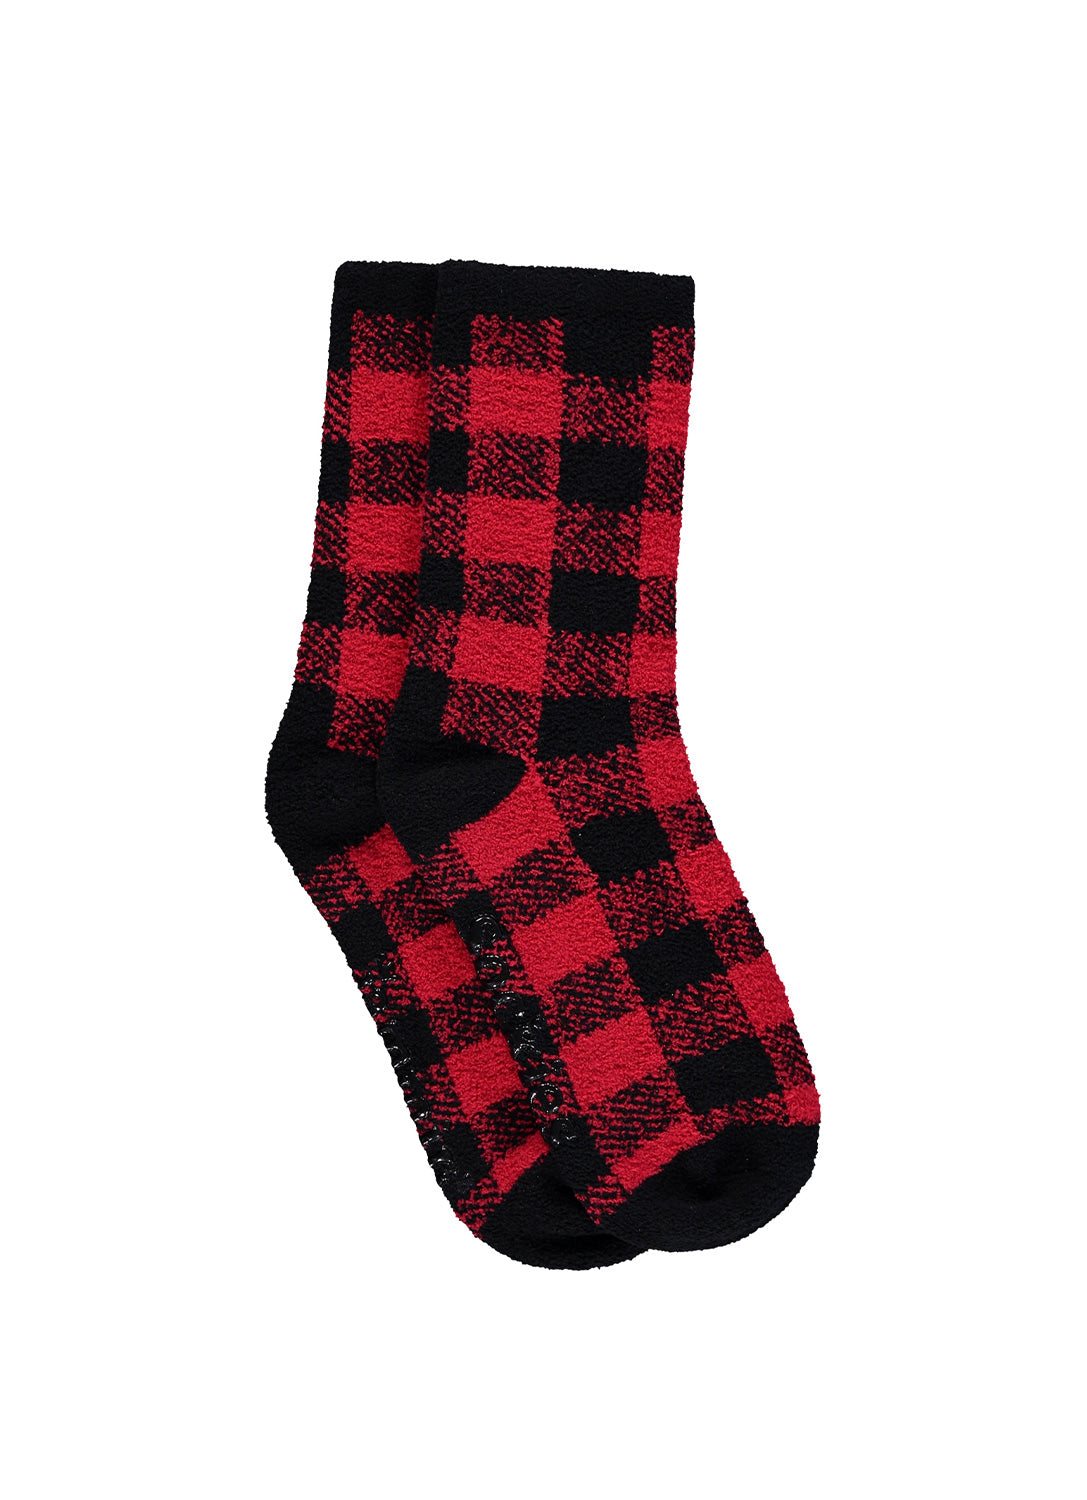 Womens Red Plaid Family Sleepwear Socks